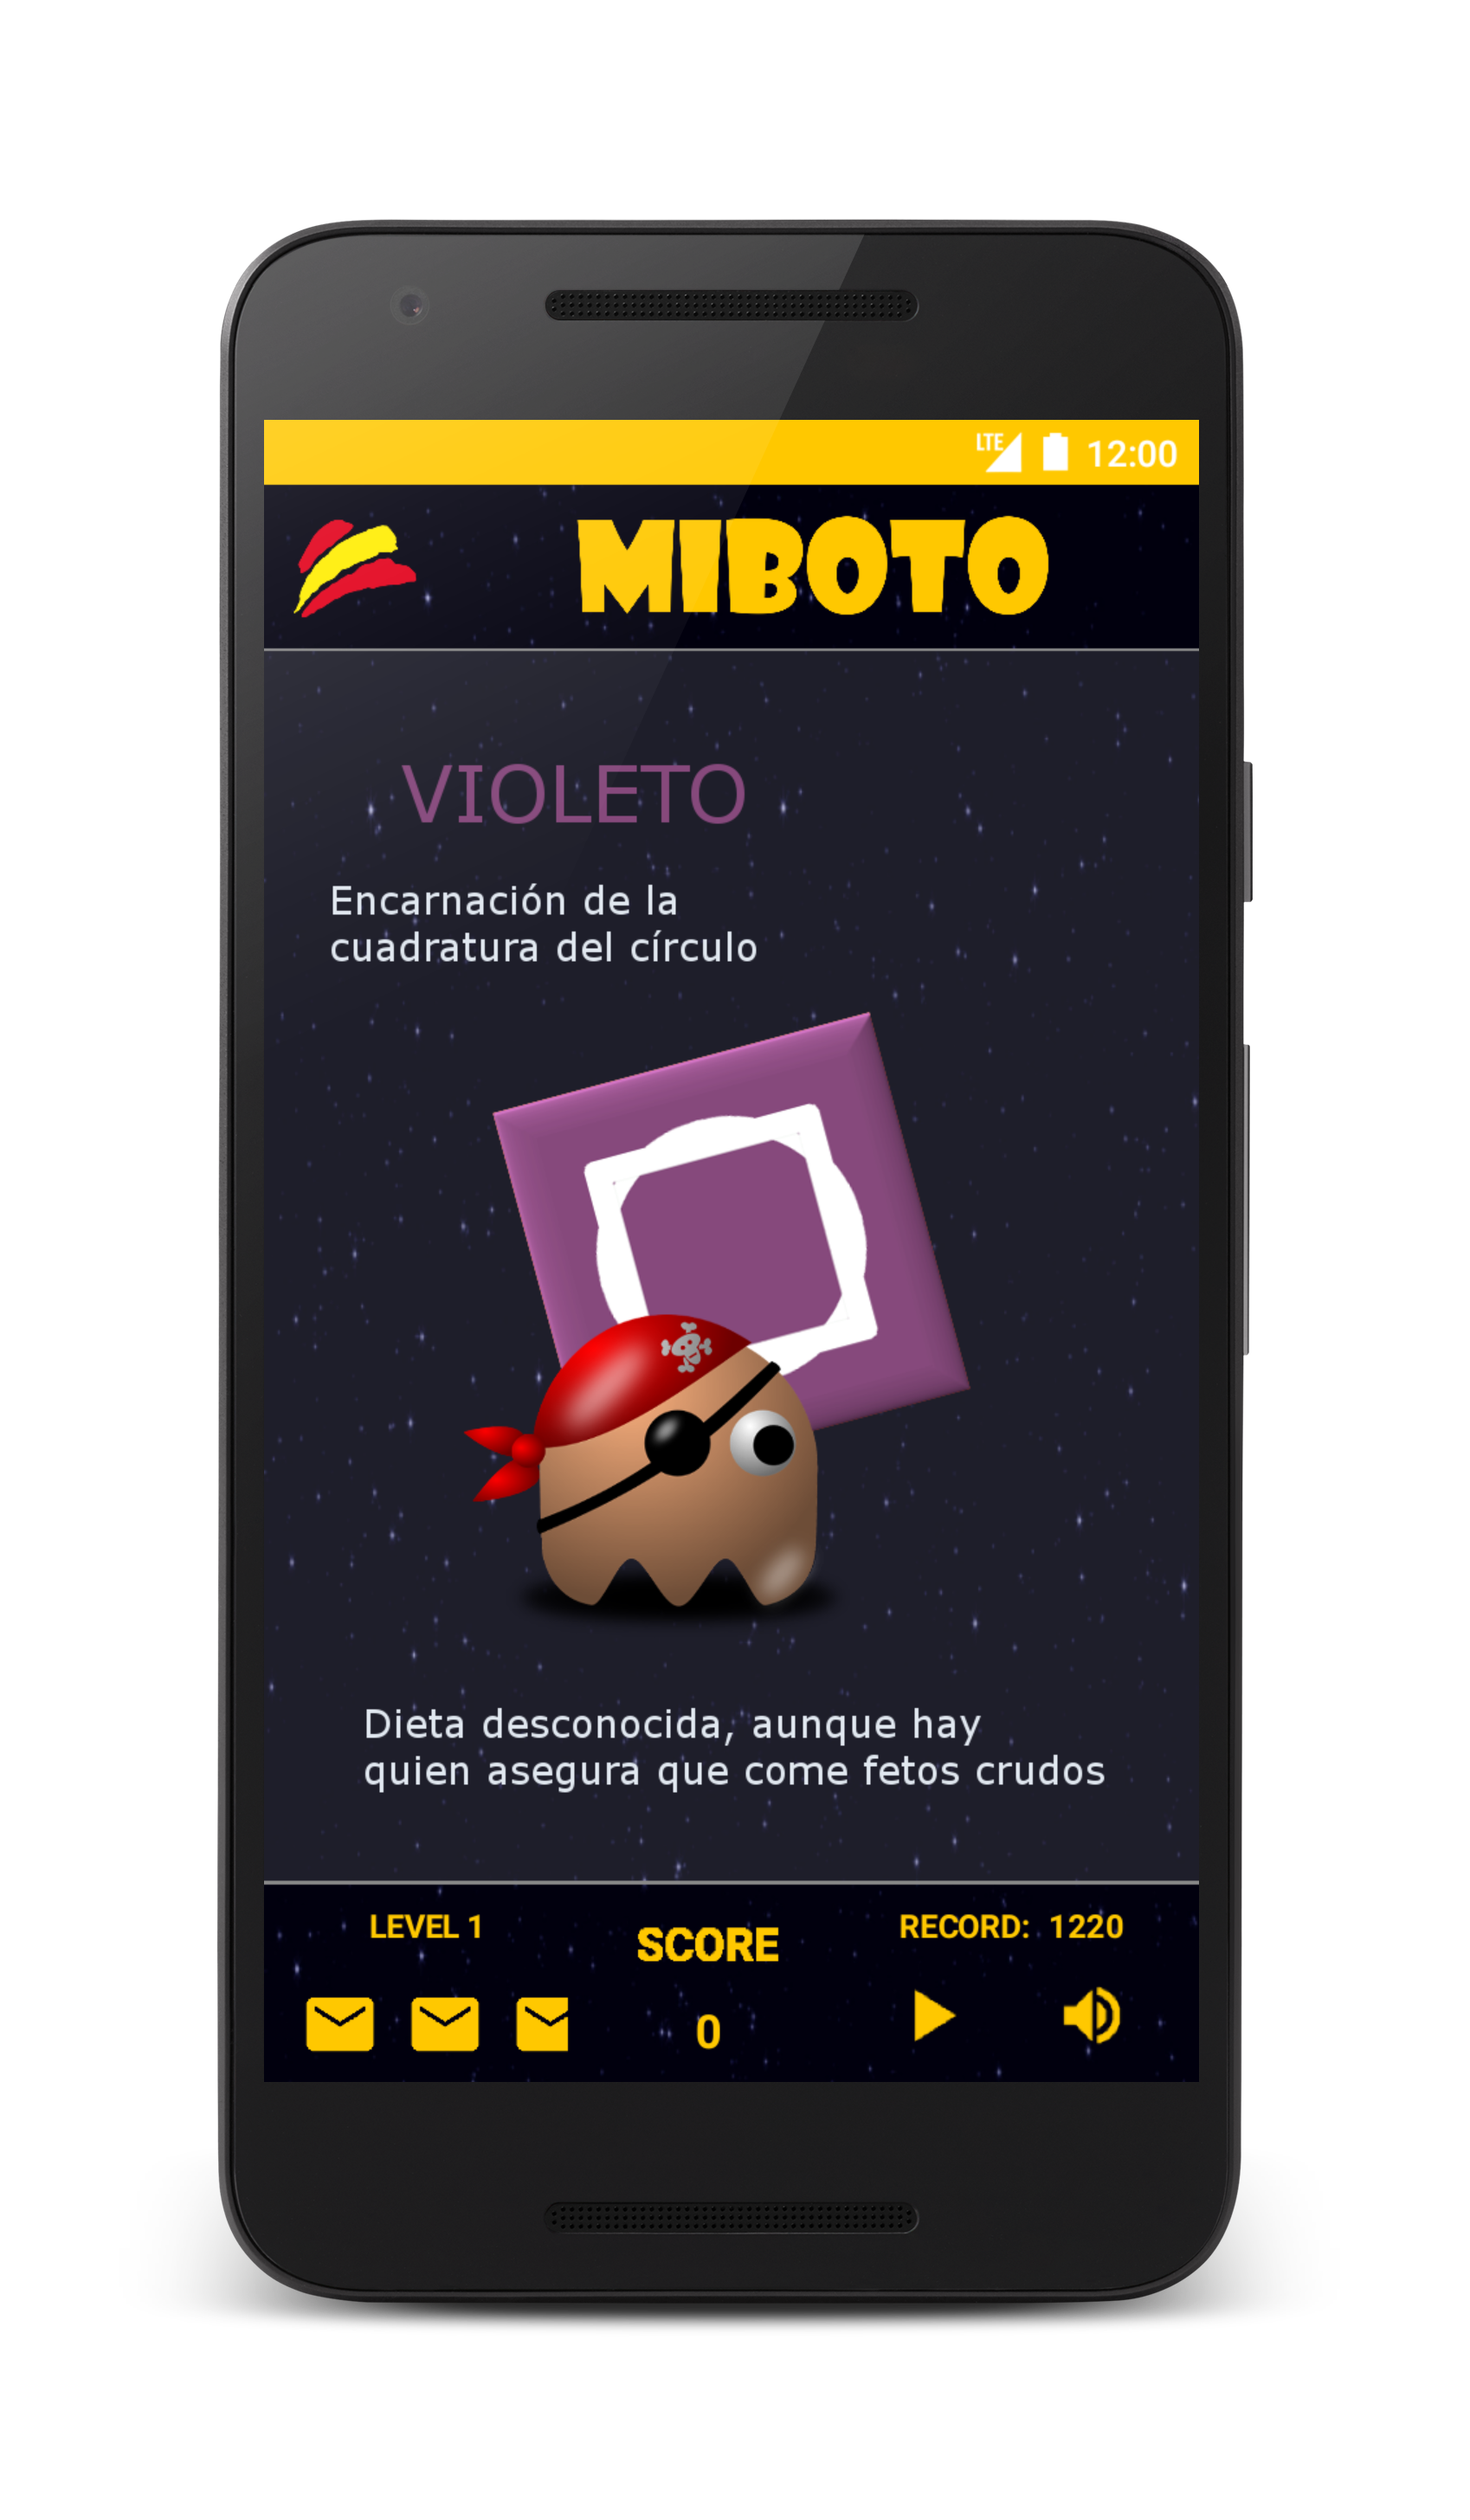 MIBOTO - a sidereal traveler